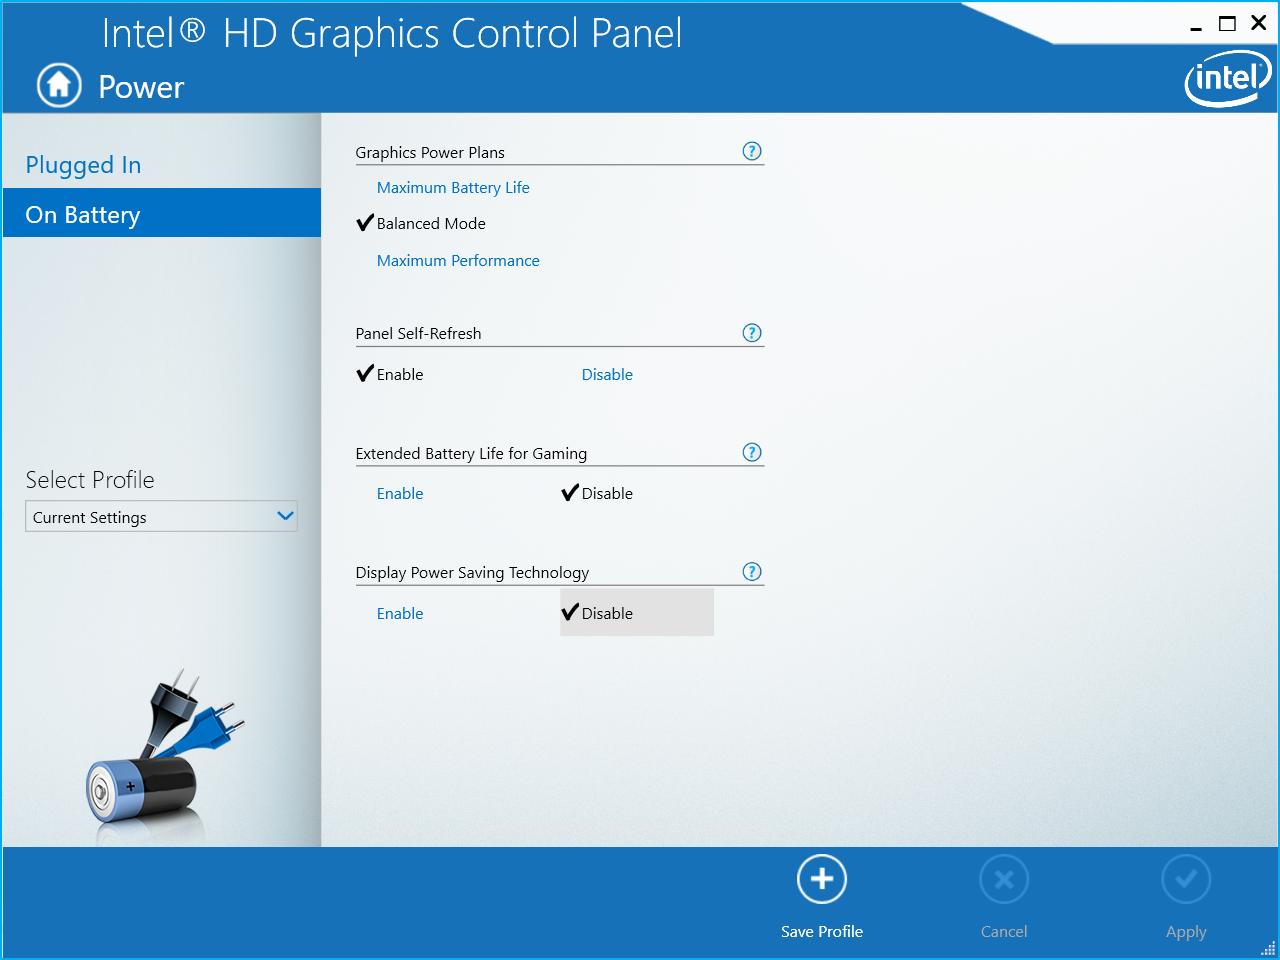 Intel HD Graphics Control Panel example